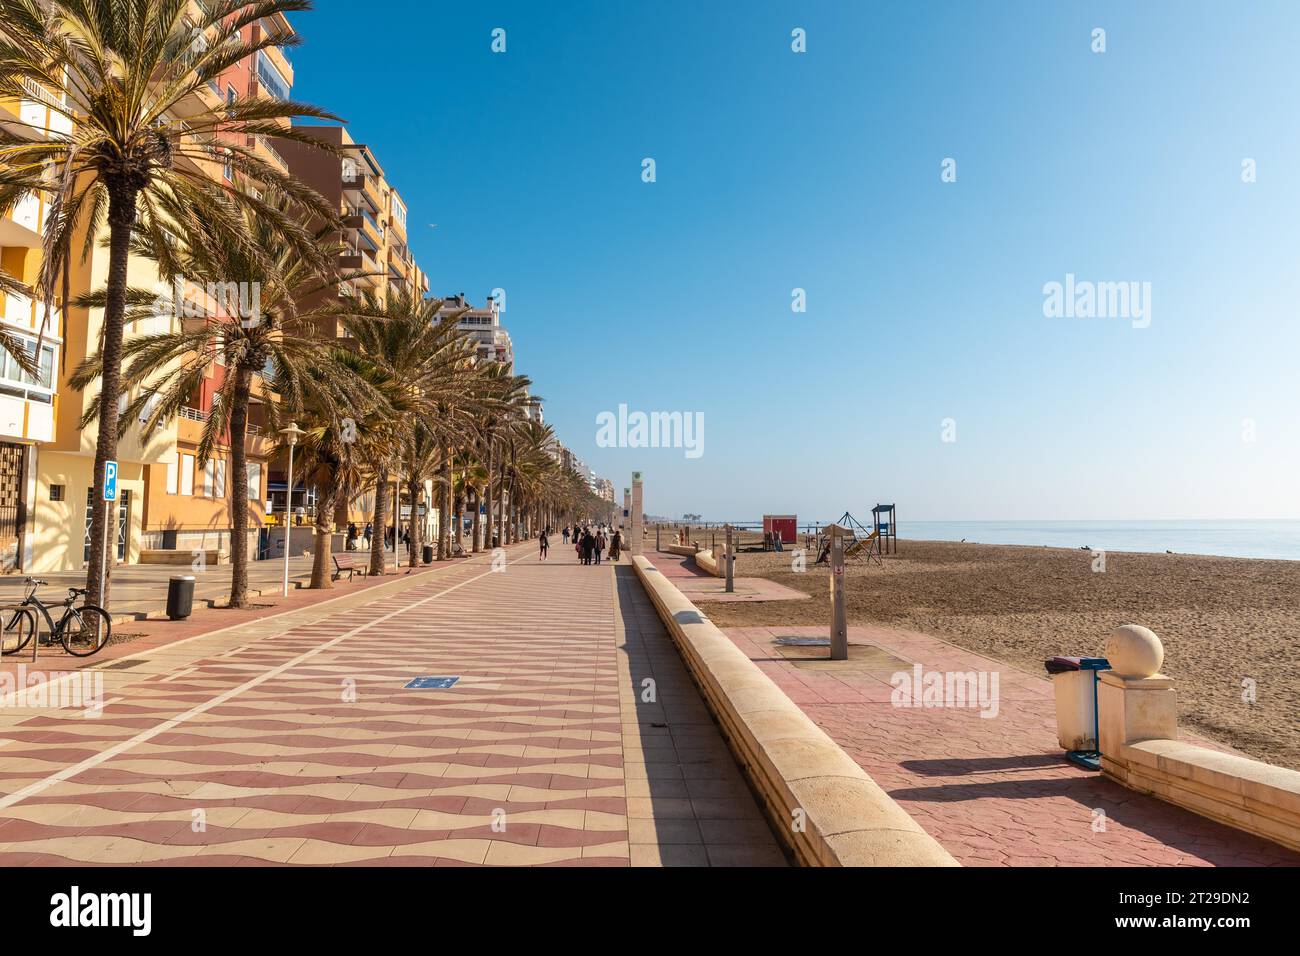 Promenade in Playa de San Miguel in der Stadt Almeria, Andalusien. Spanien. Costa del sol im mittelmeer Stockfoto